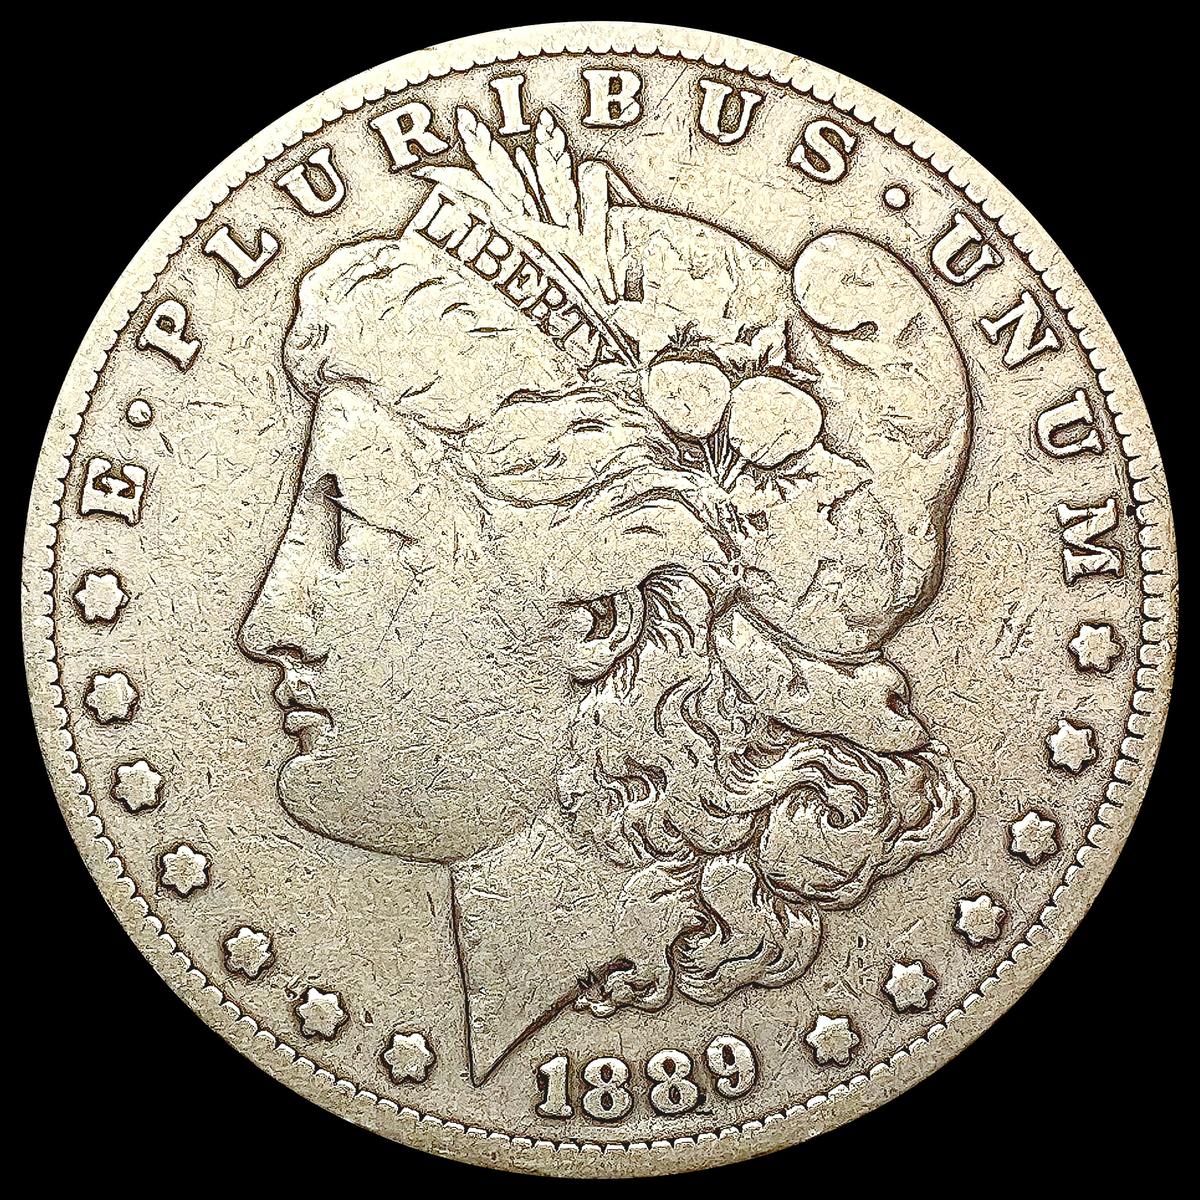 1889-CC Morgan Silver Dollar NICELY CIRCULATED